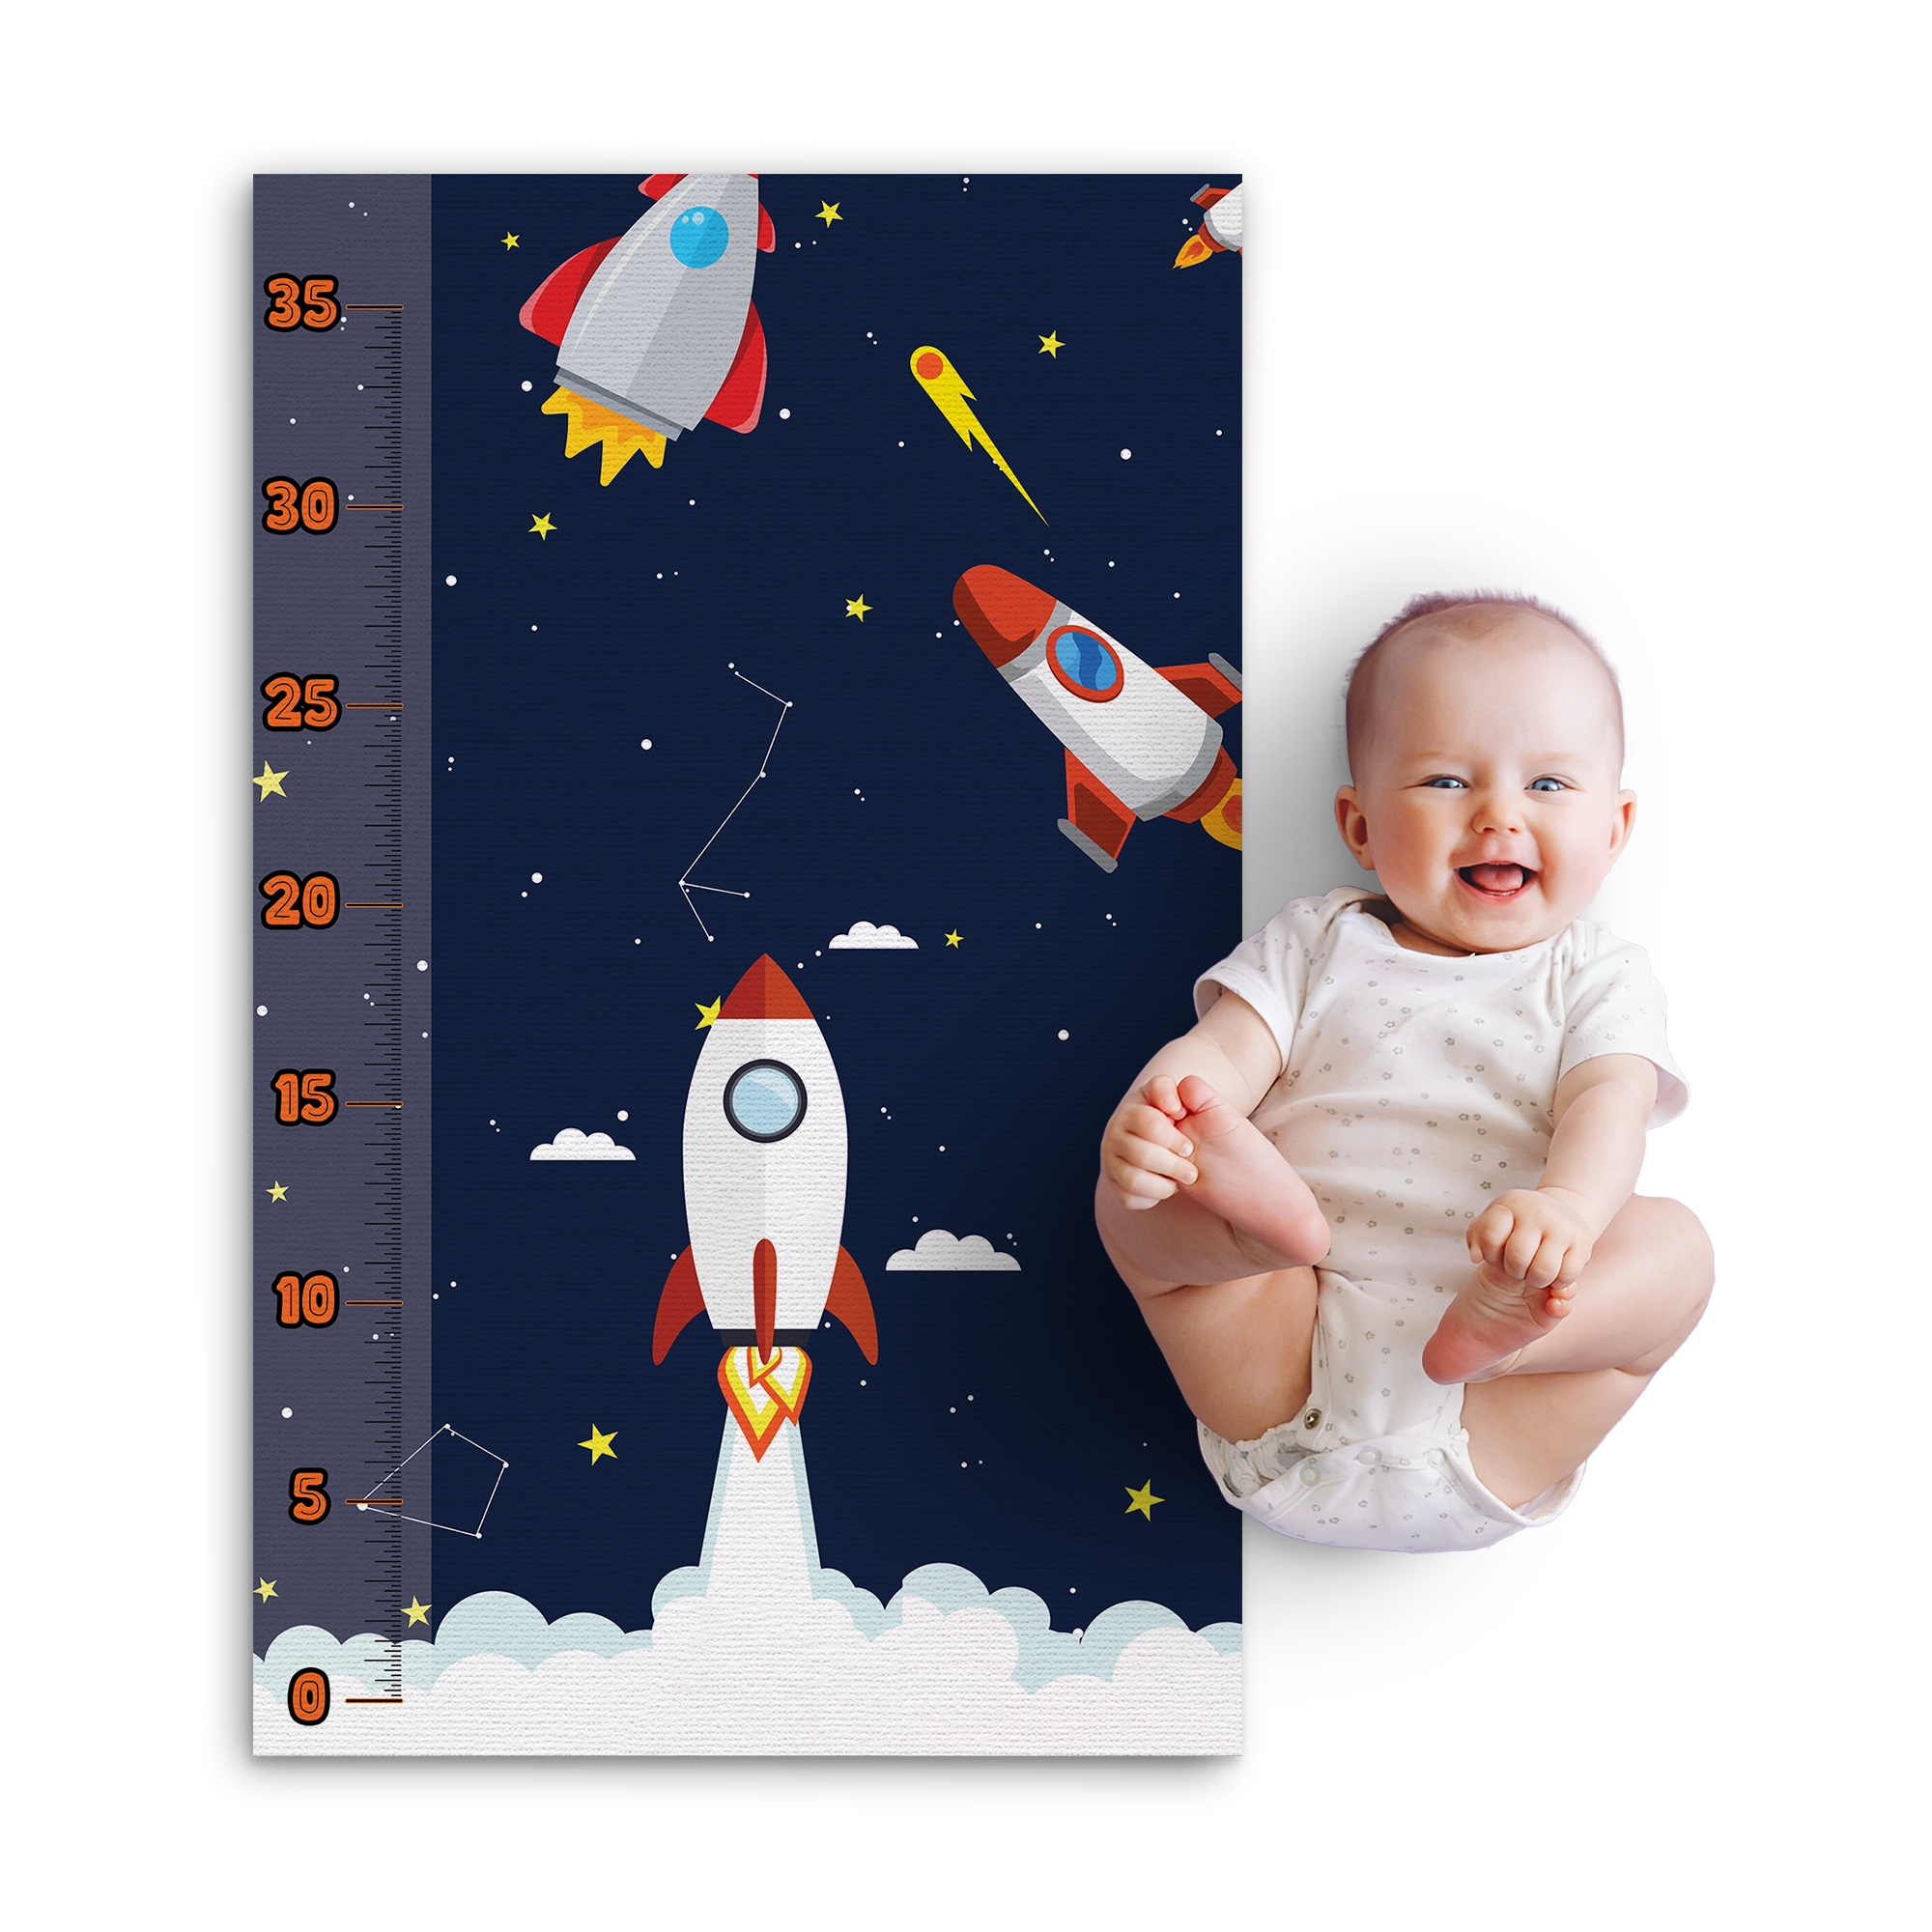 Rocket Infant Growth Chart